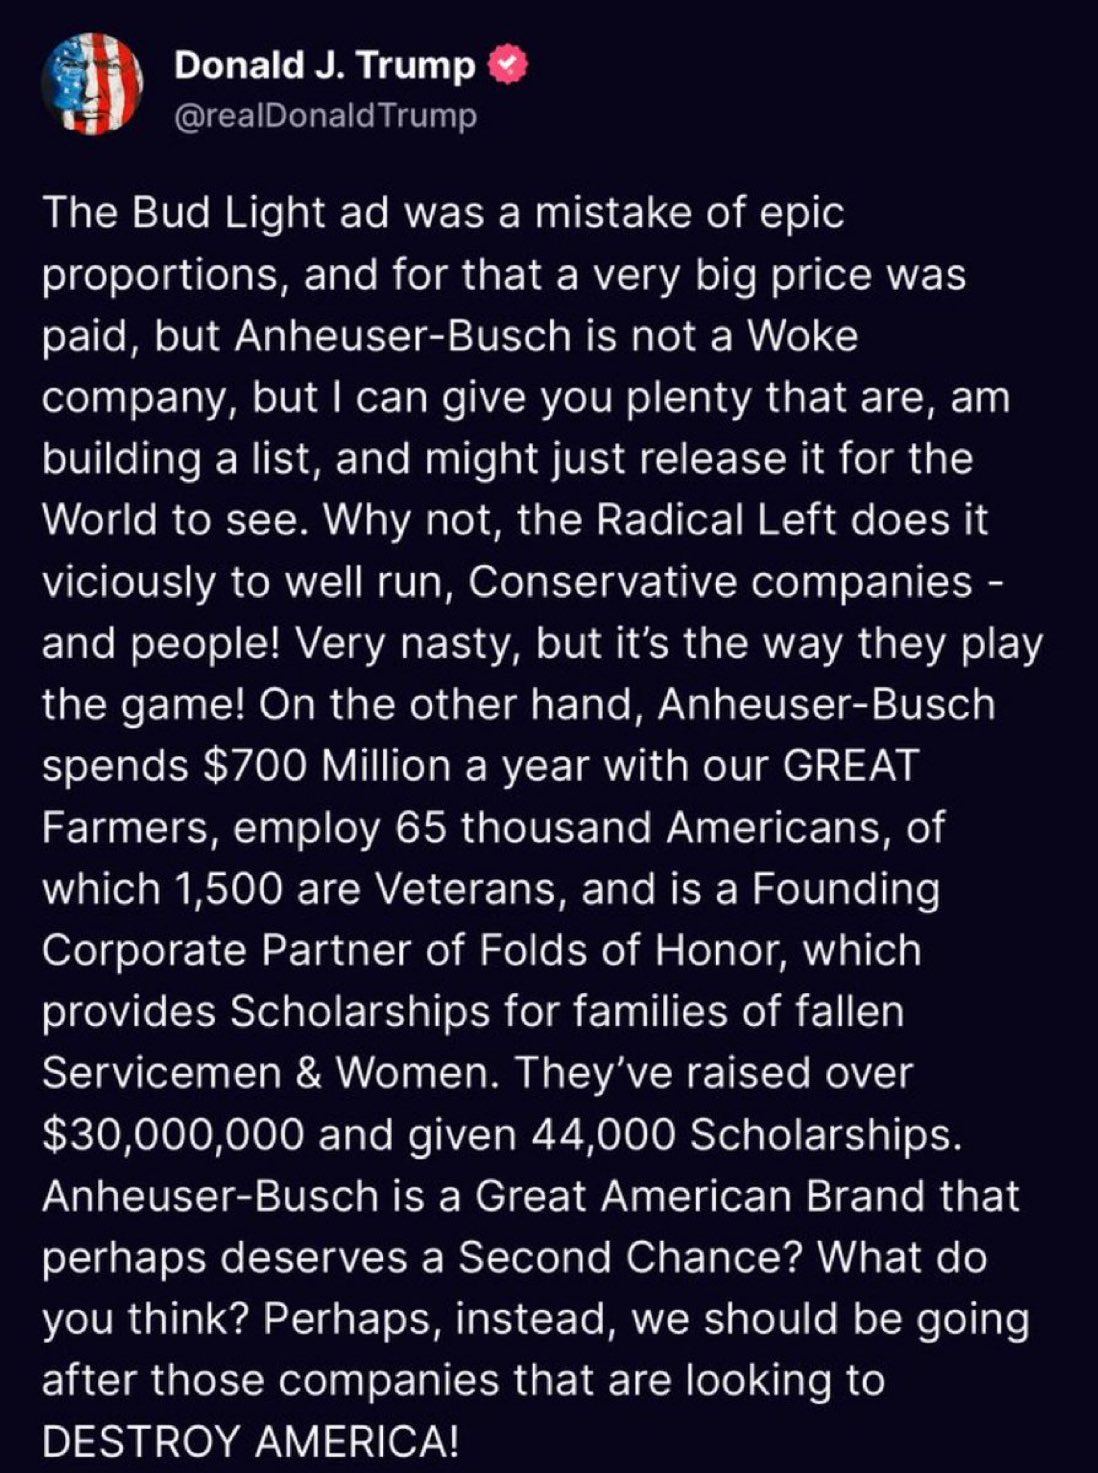 Give Anheuser-Busch a Second Chance?